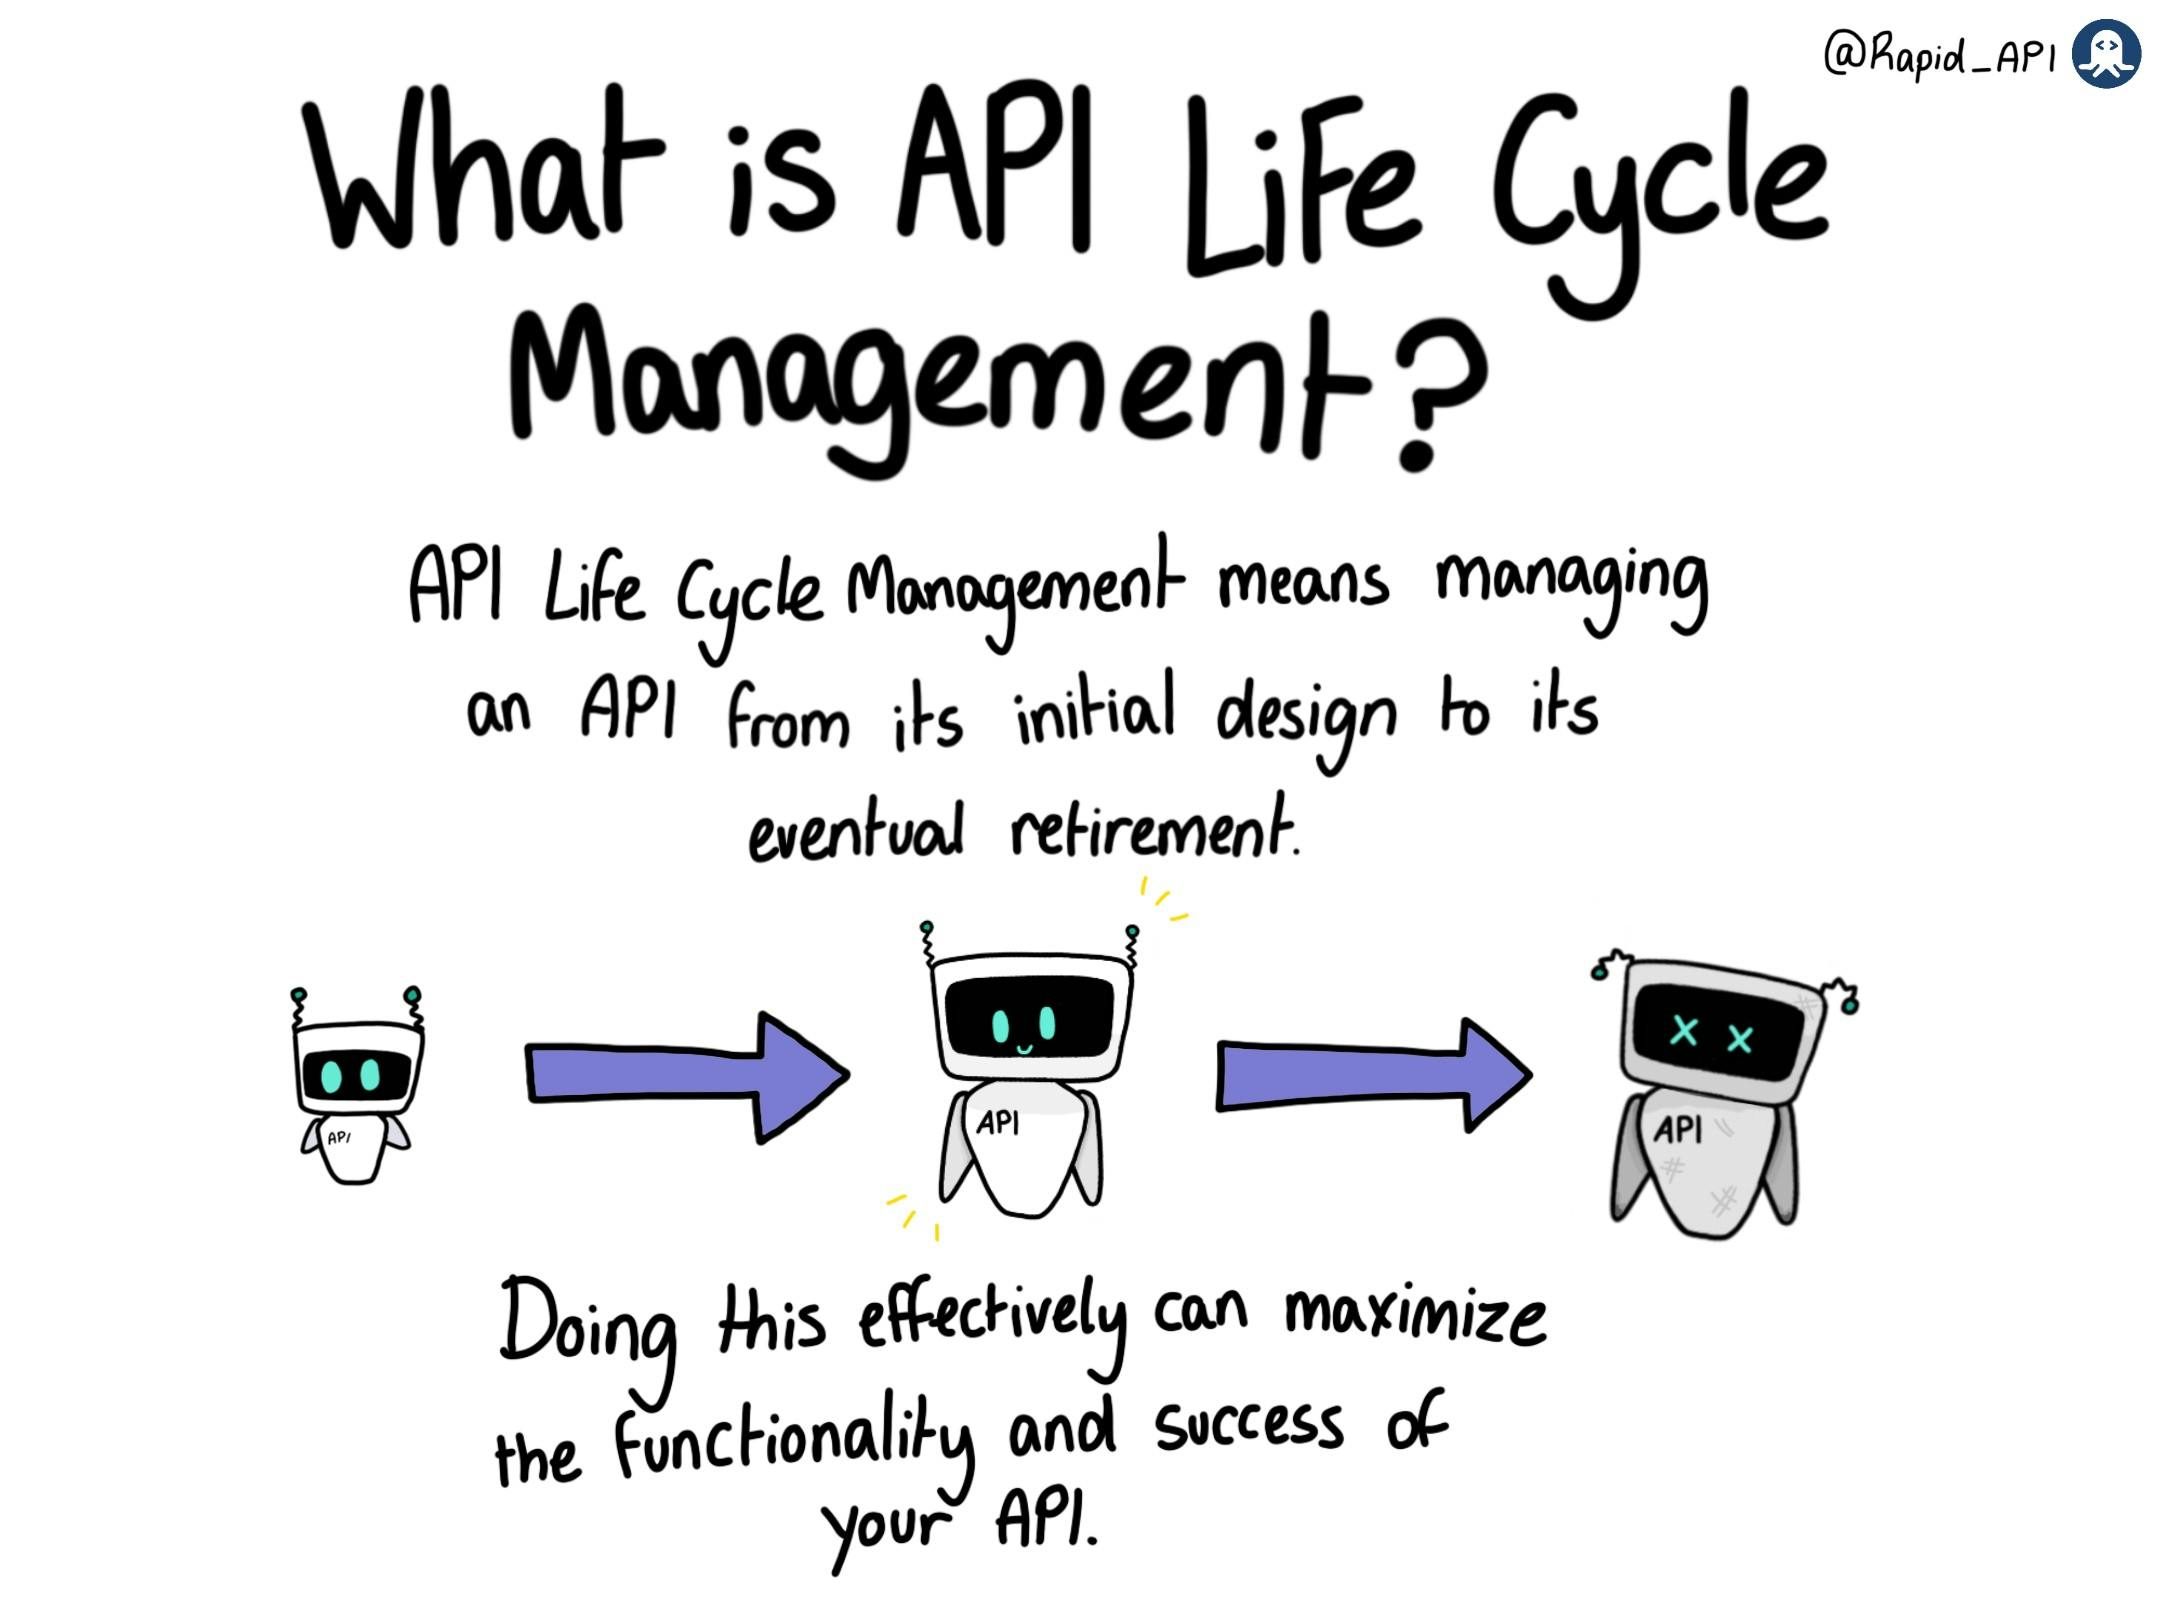 API Life Cycle Management